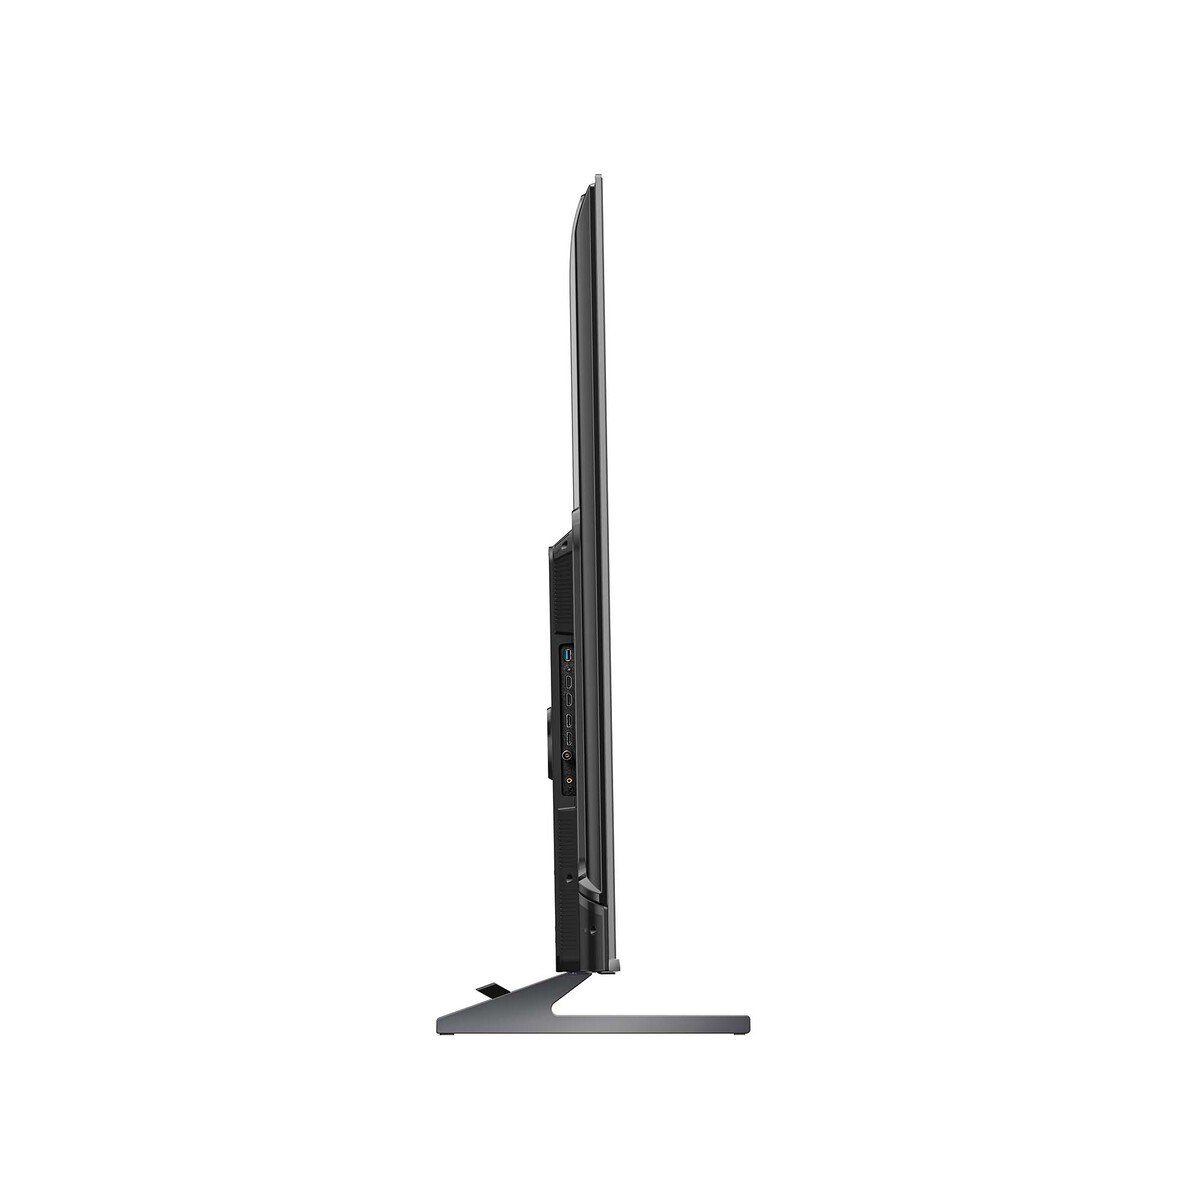 Hisense 75 inches 4K Smart ULED TV, Black, 75U7HQ